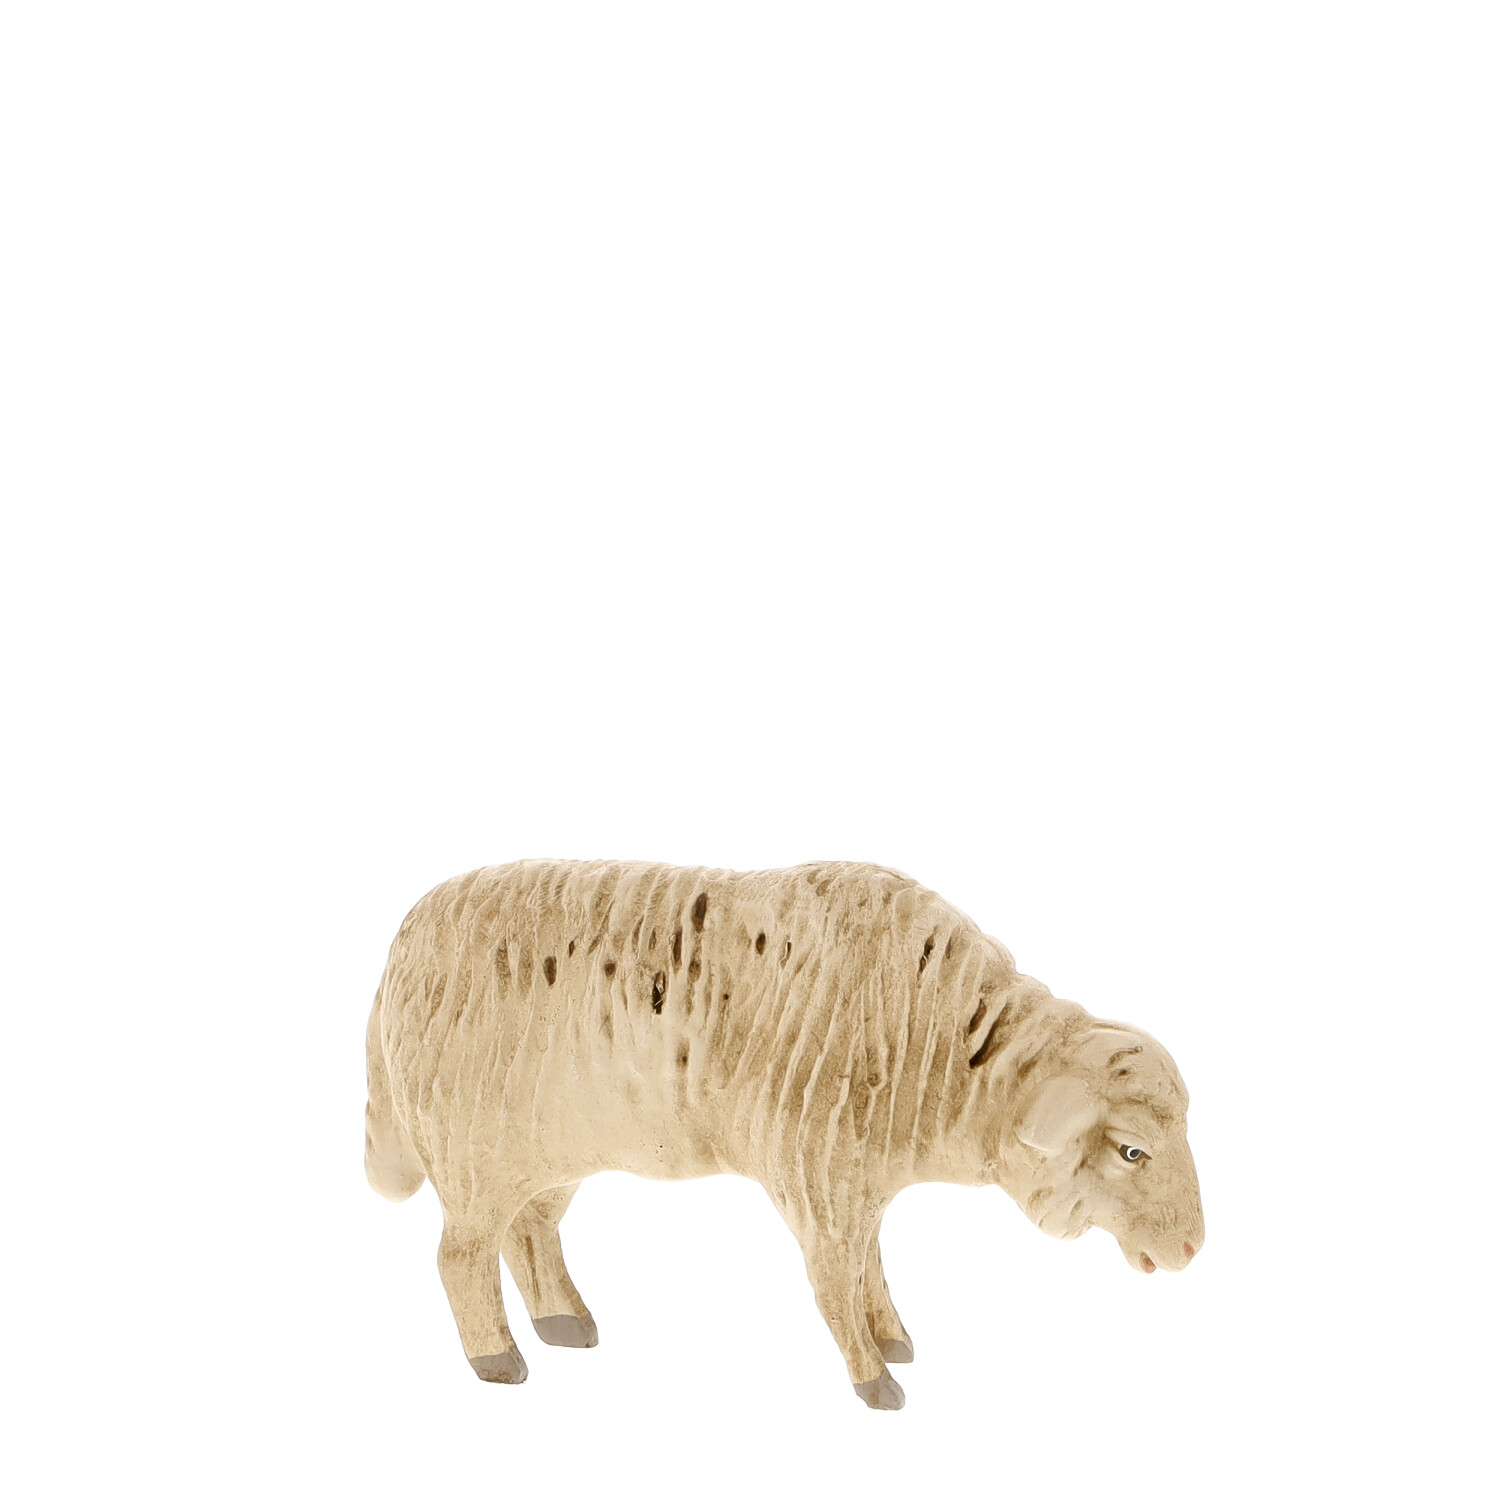 Grazing sheep - Marolin Nativity figure - made in Germany